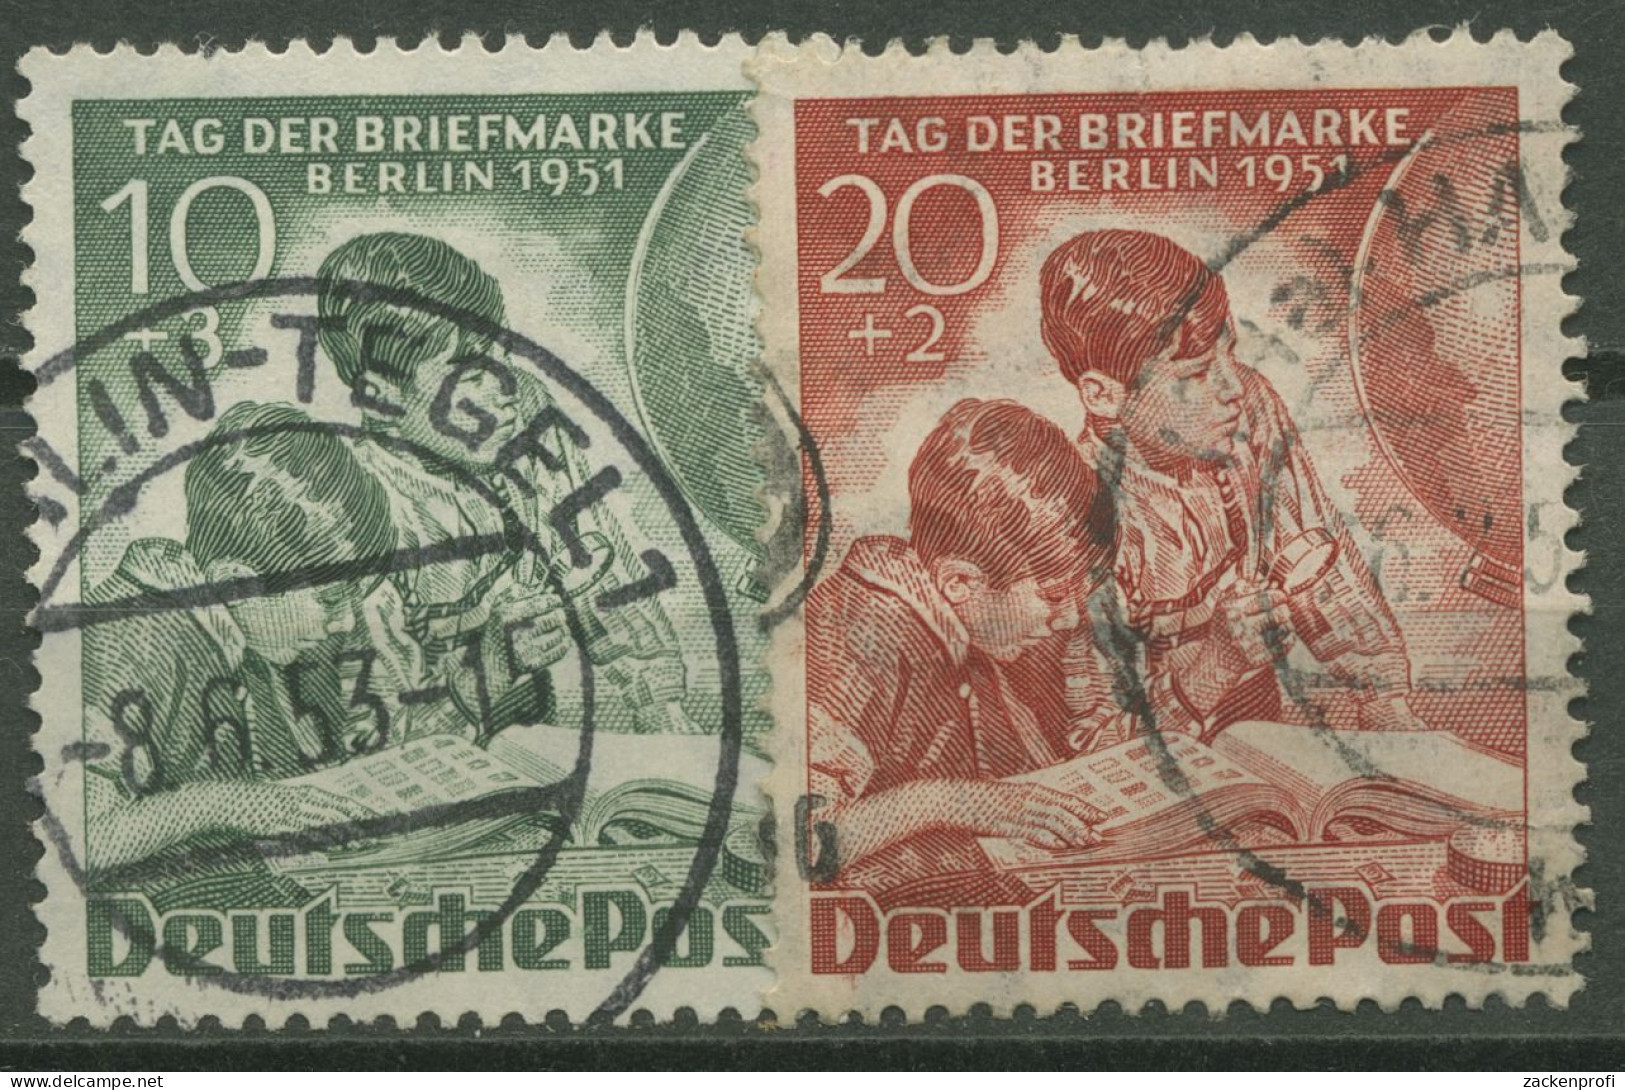 Berlin 1951 Tag Der Briefmarke 80/81 Gestempelt, Kl. Zahnfehler (R80893) - Used Stamps